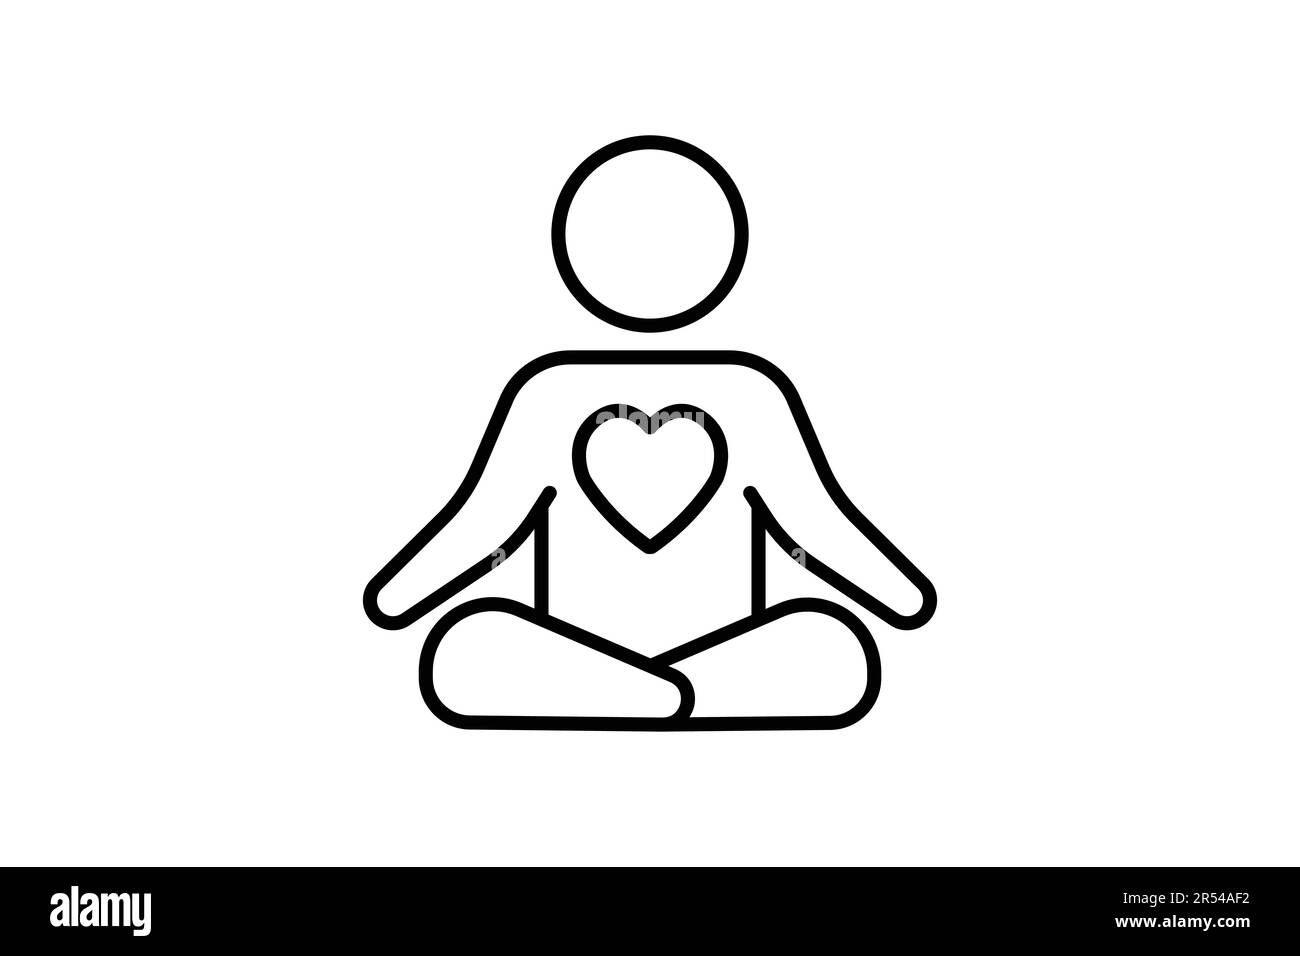 Yoga icon Black and White Stock Photos & Images - Alamy